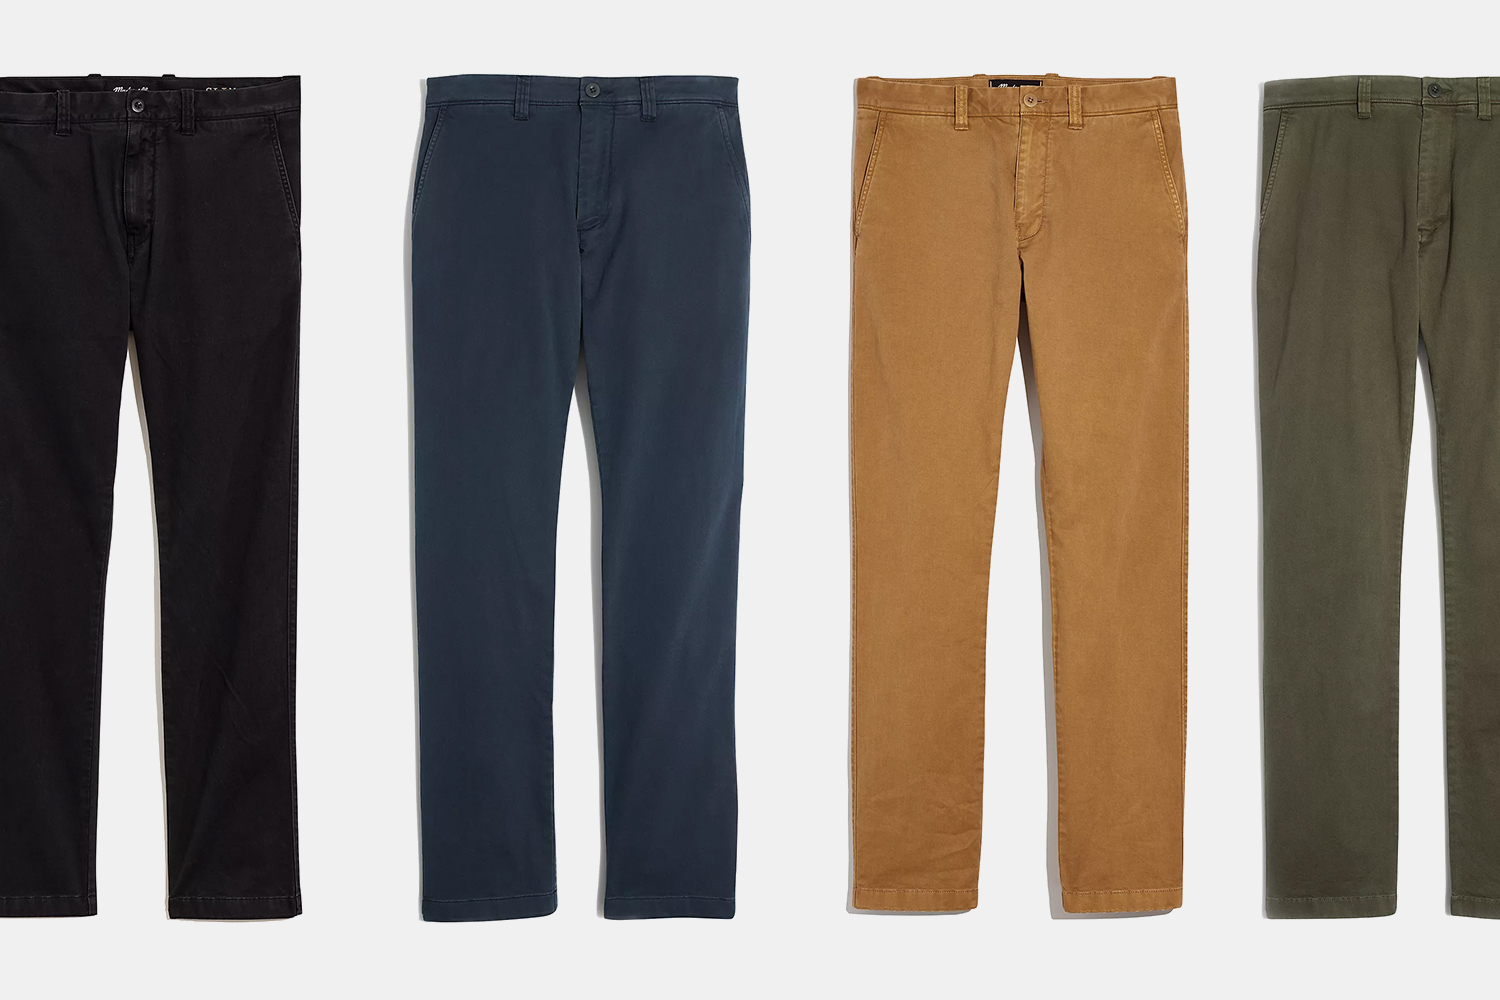 Take an Extra 50% Off Madewell's Penn Slim Chino Pants - InsideHook